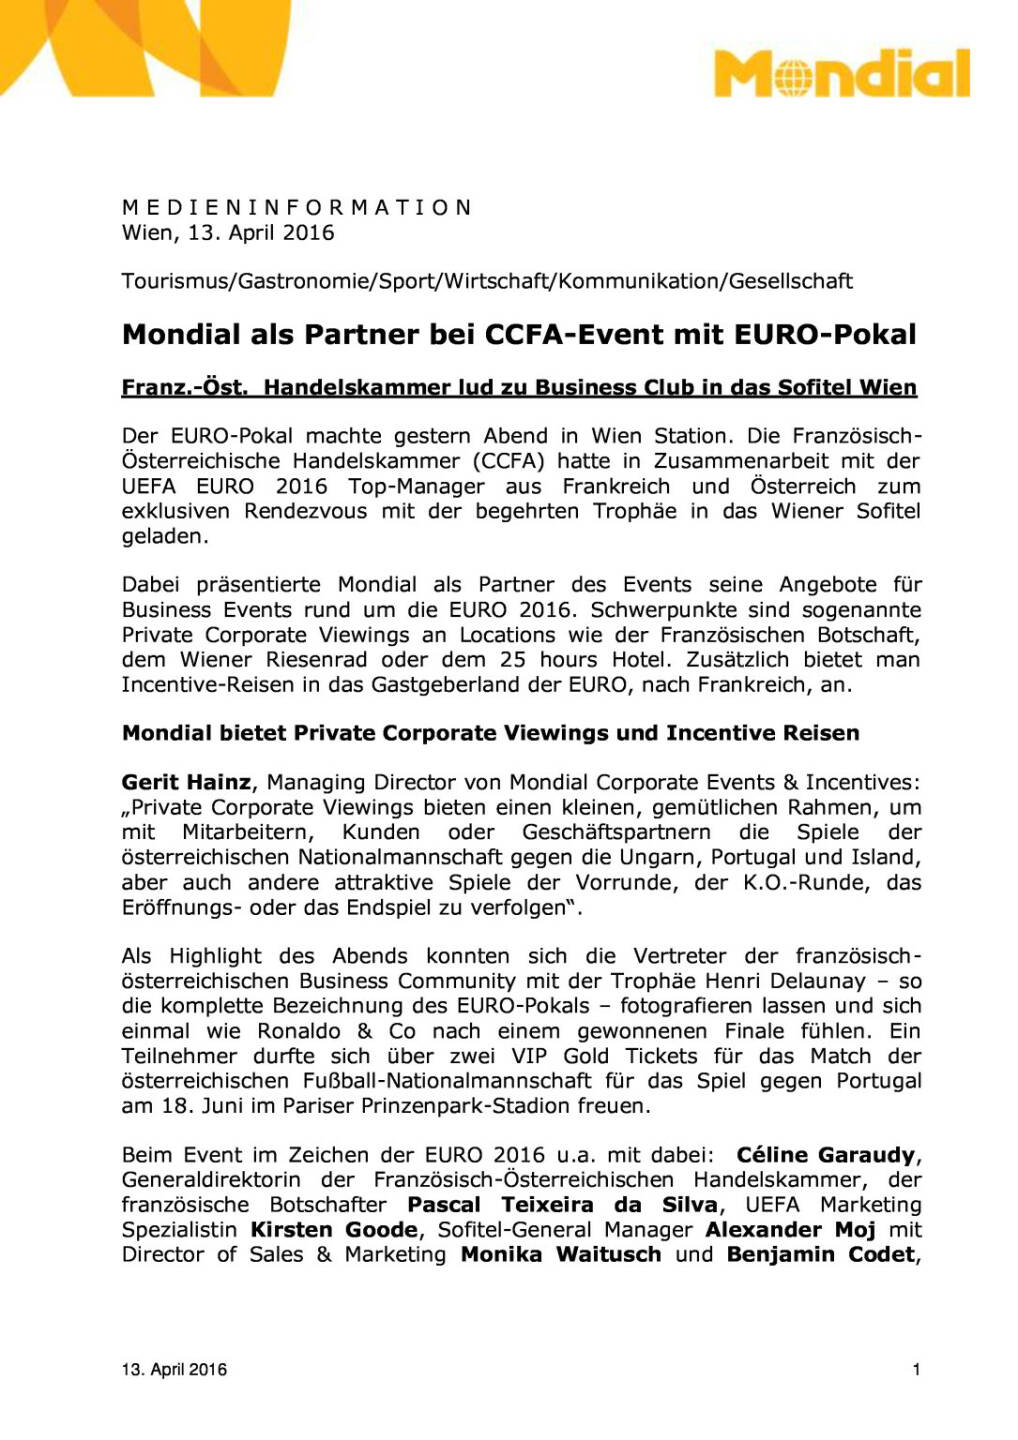 Mondial als Partner bei CCFA-Event mit EURO-Pokal, Seite 1/2, komplettes Dokument unter http://boerse-social.com/static/uploads/file_882_mondial_als_partner_bei_ccfa-event_mit_euro-pokal.pdf